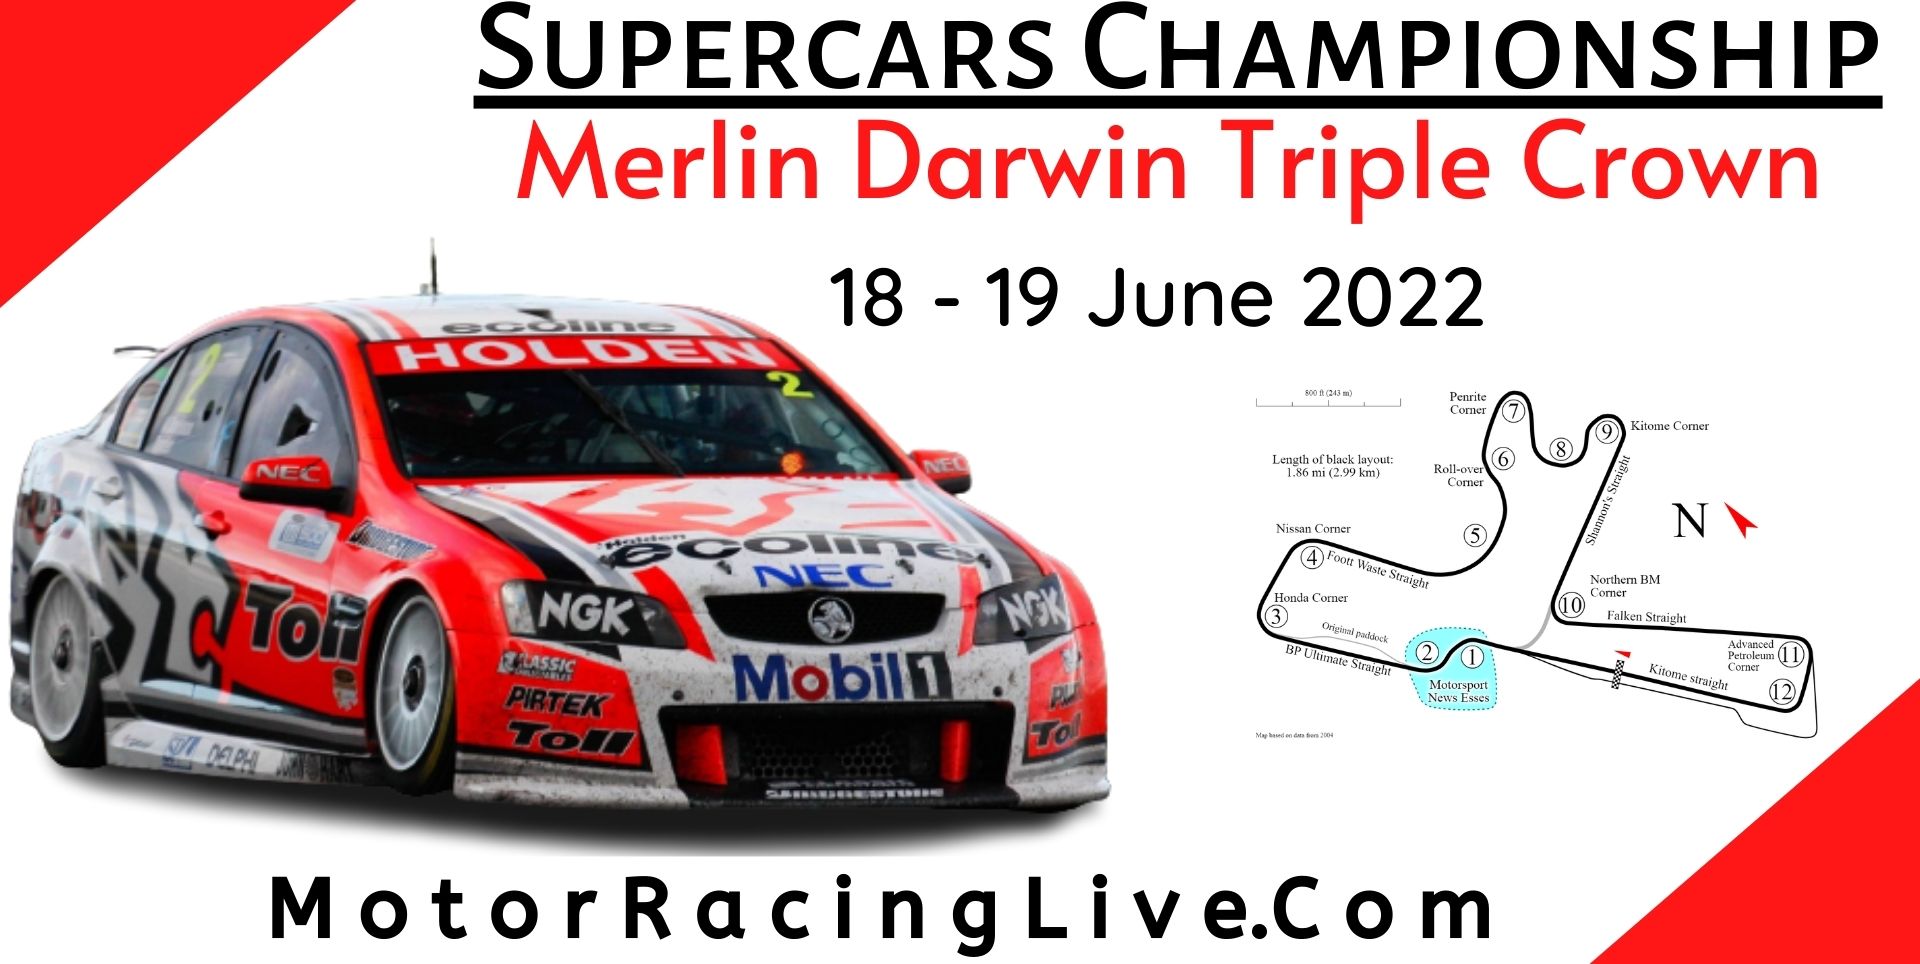 Merlin Darwin Triple Crown Live Stream 2022 | Supercars